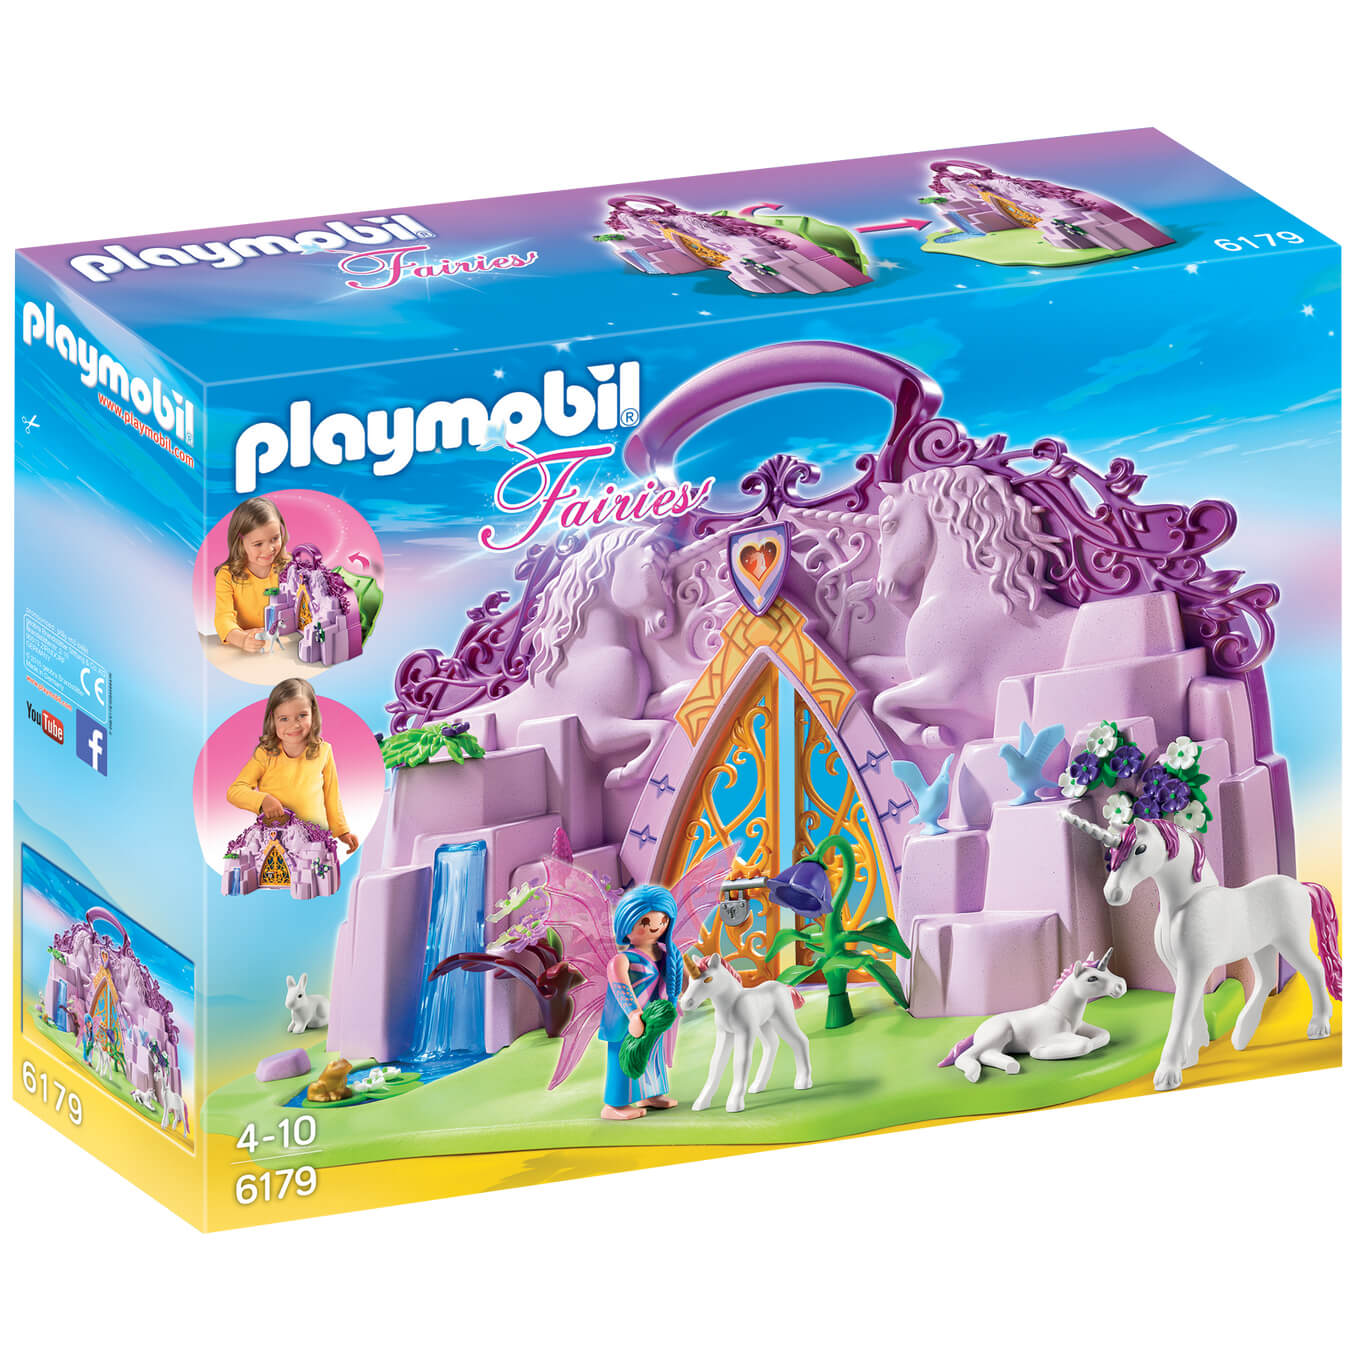 Ilot enchanté transportable (6179) -Playmobil